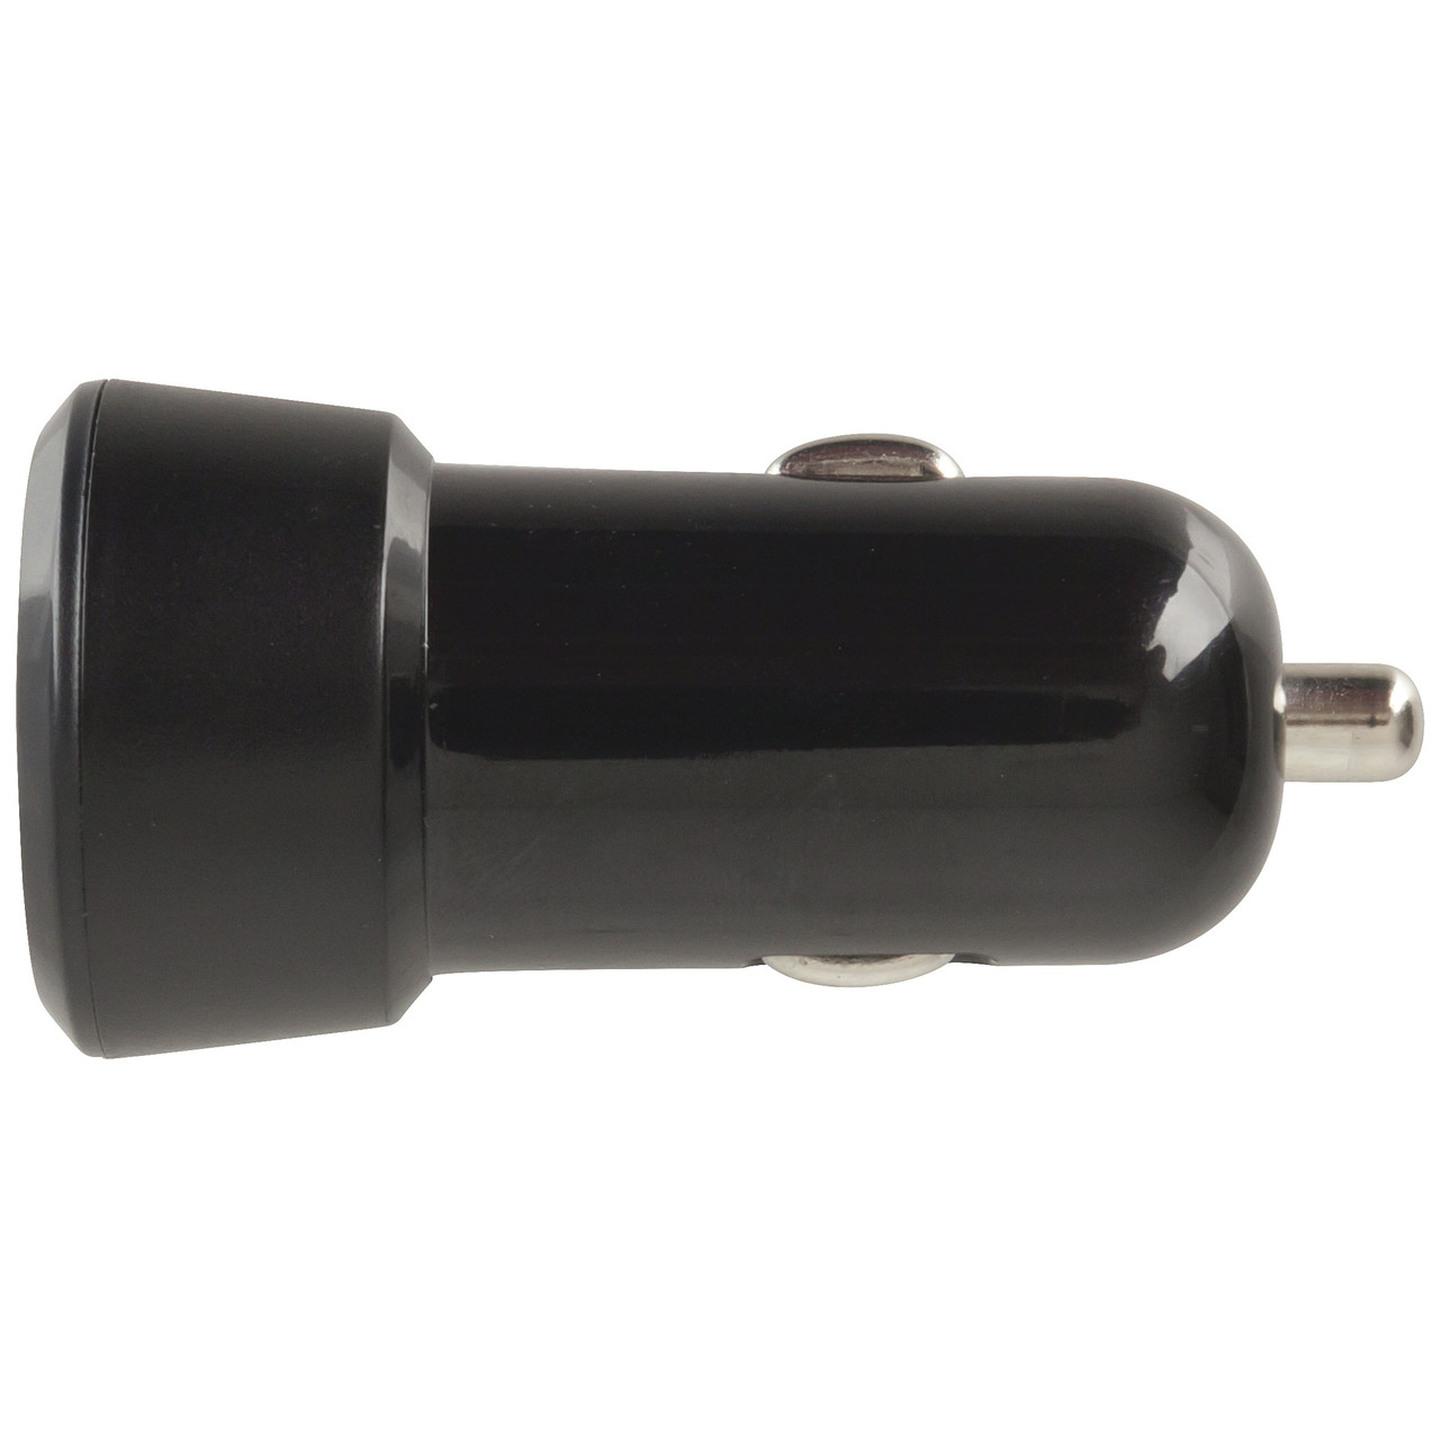 3A USB Type-C Car Cigarette Lighter Adaptor